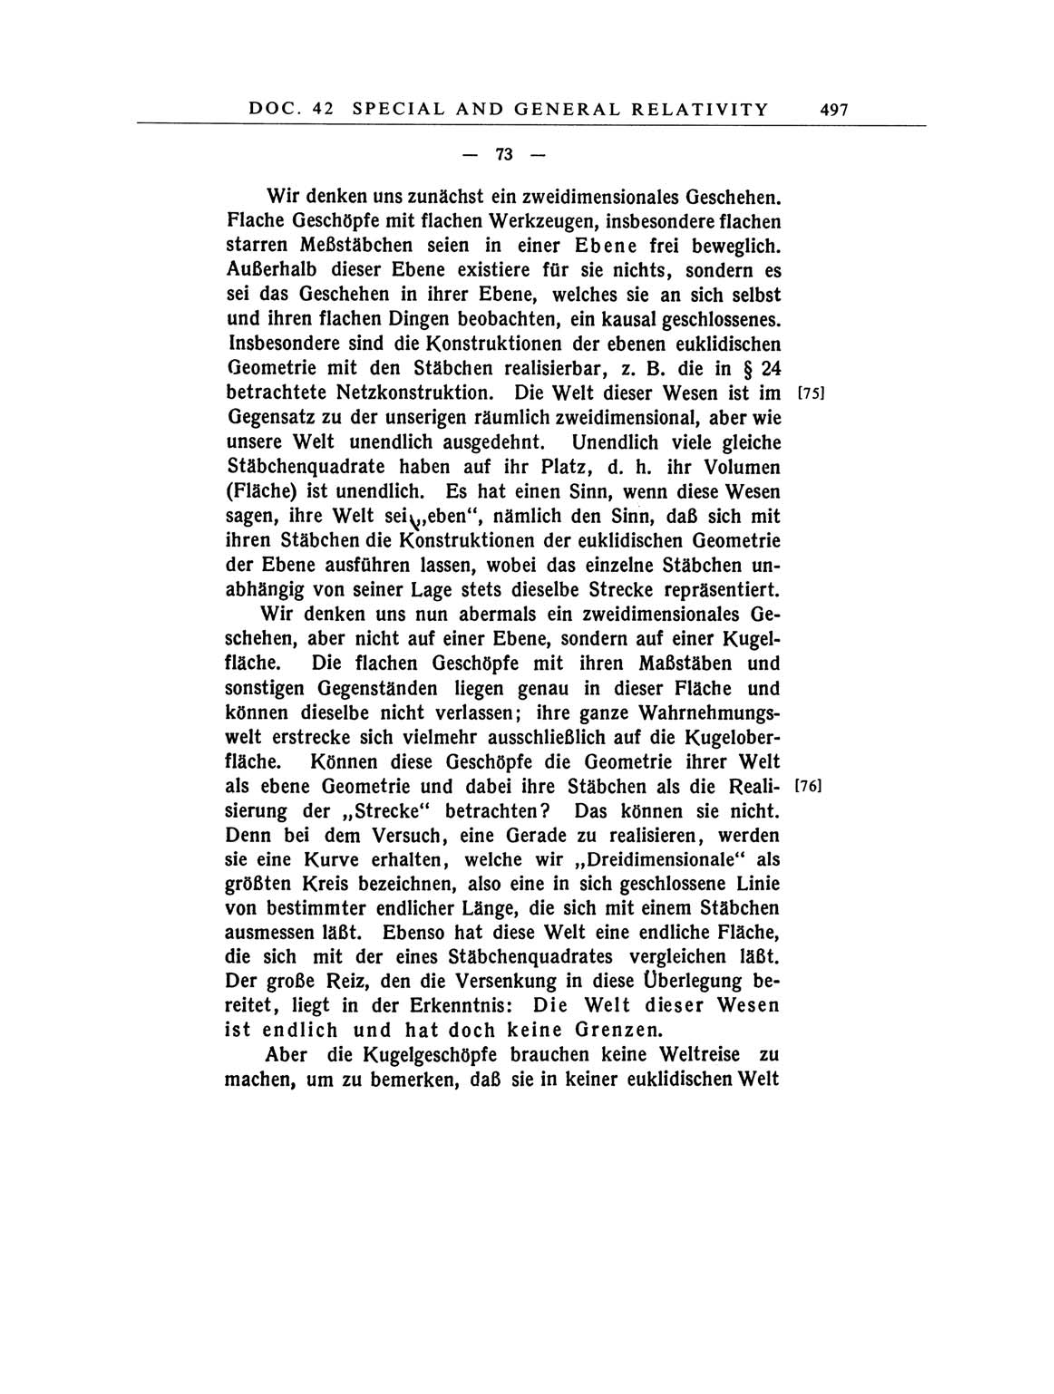 Volume 6: The Berlin Years: Writings, 1914-1917 page 497